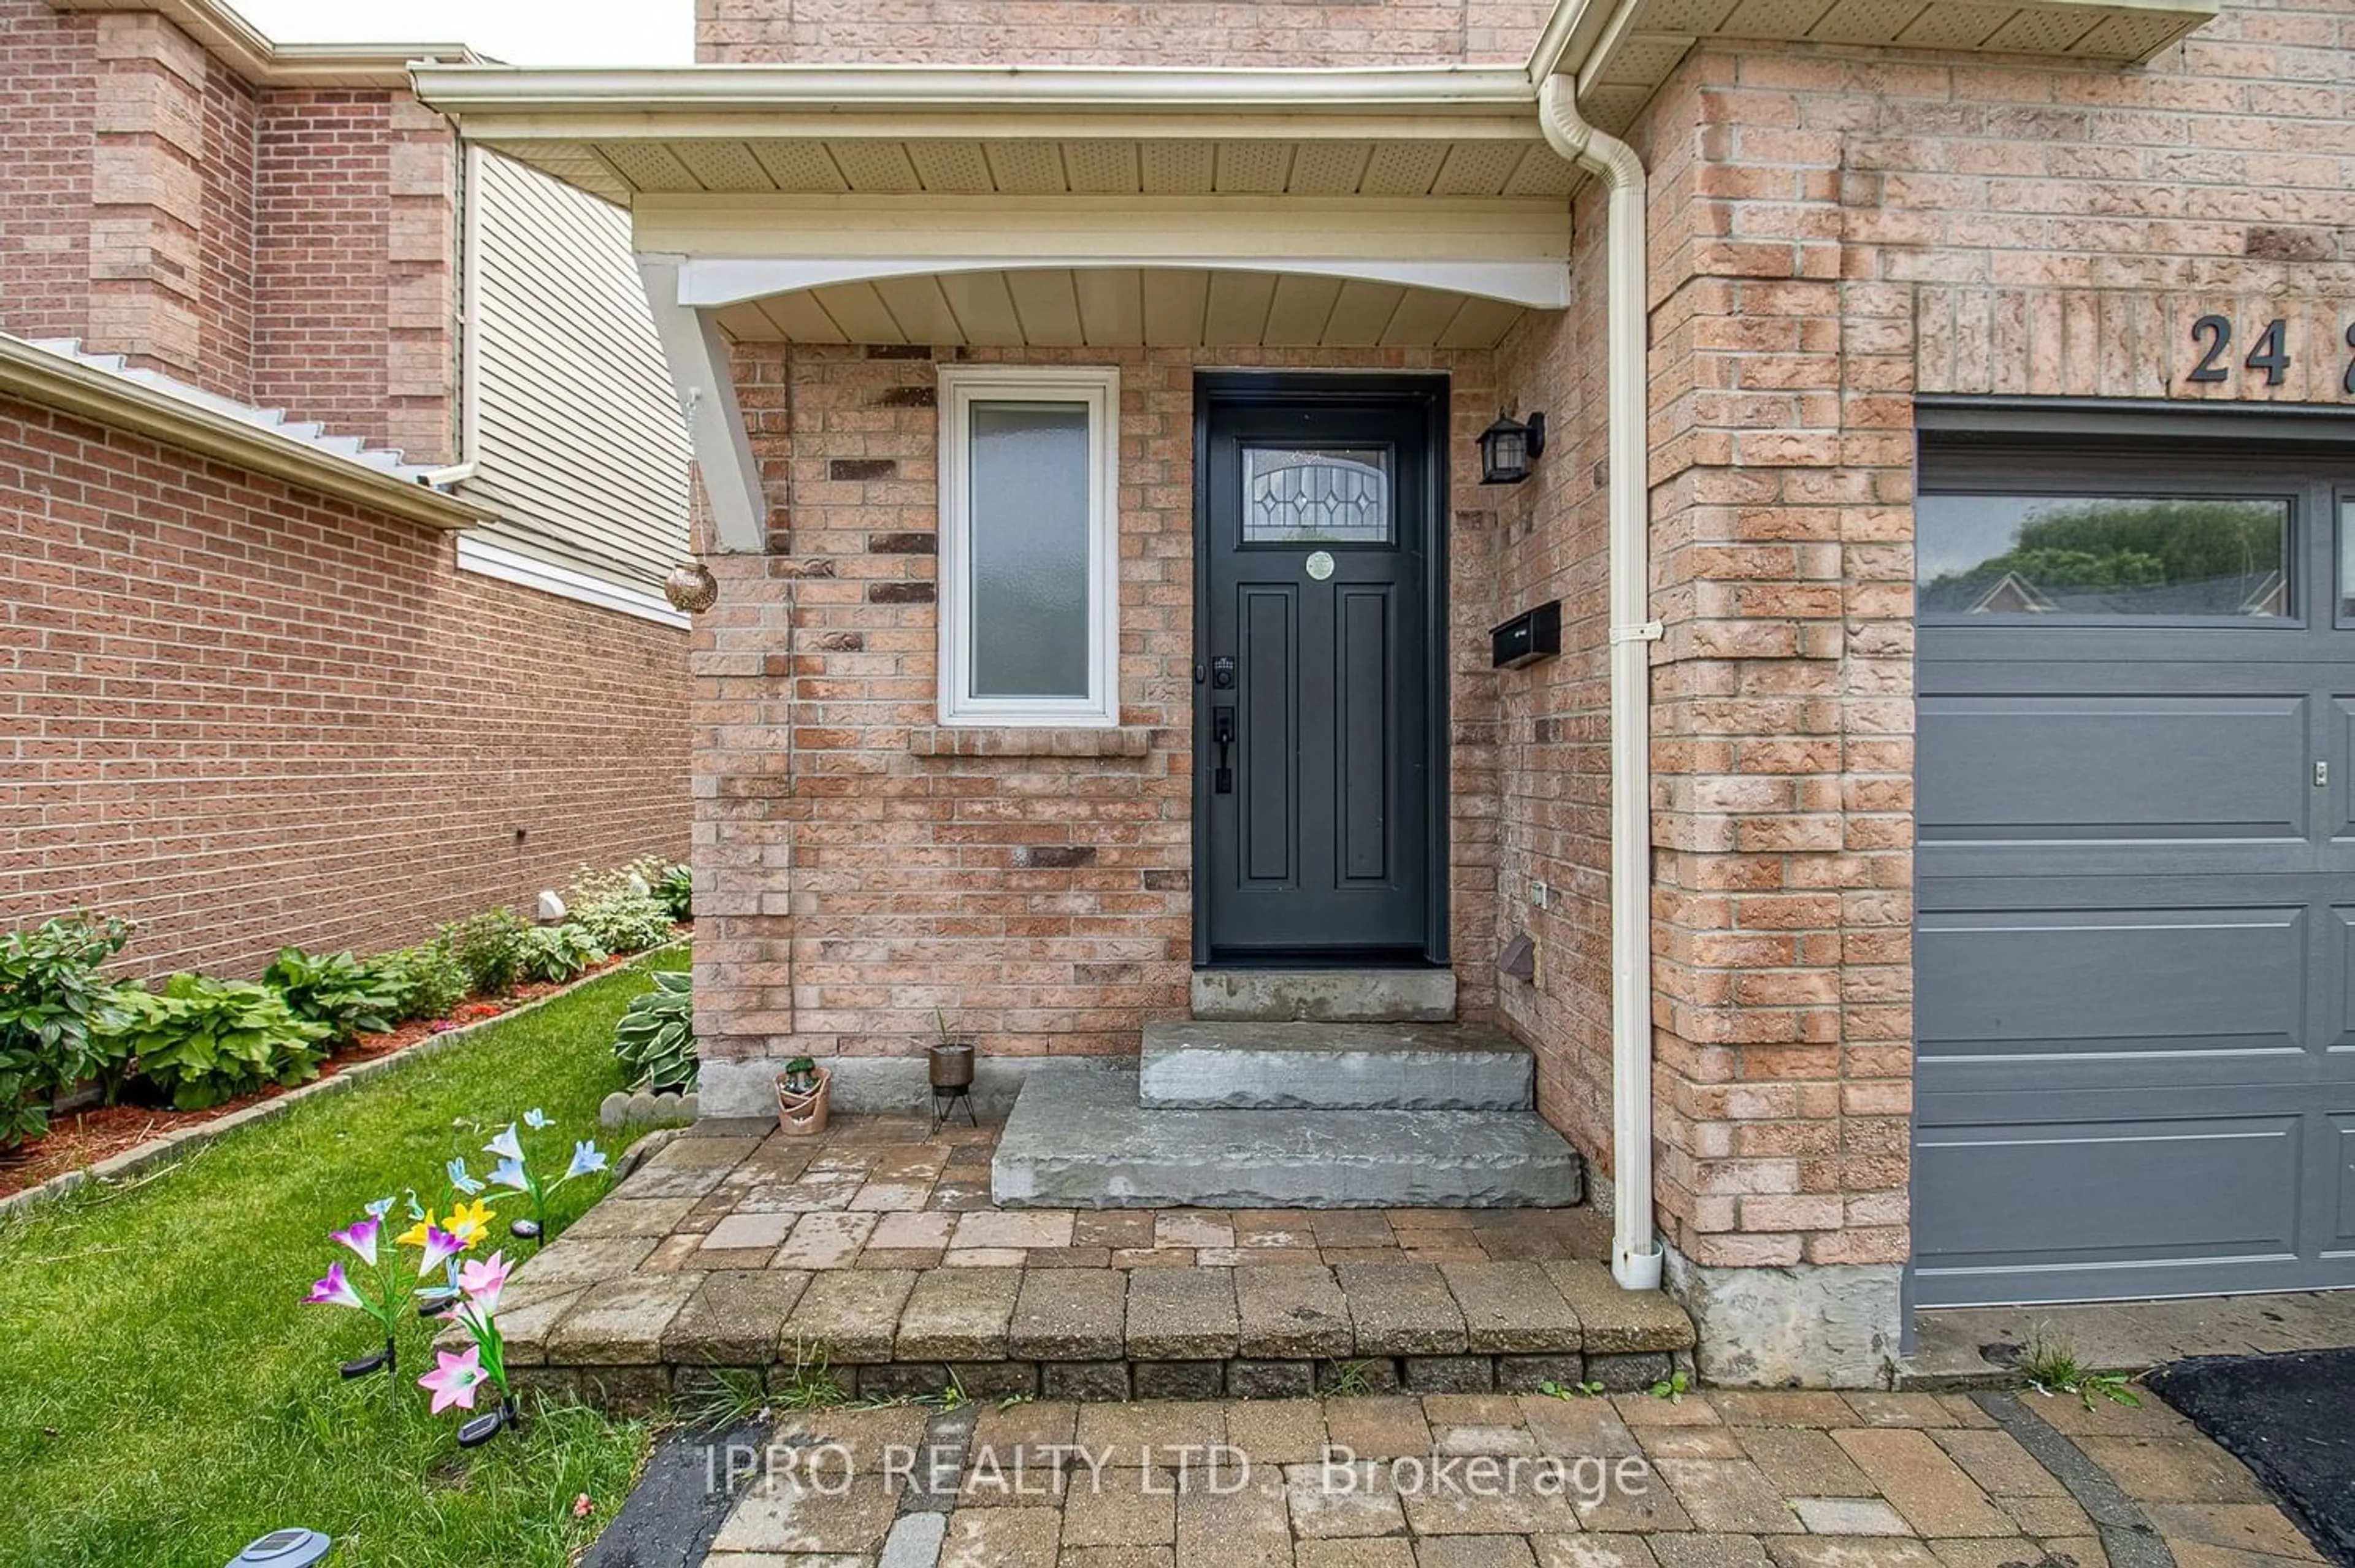 Home with brick exterior material for 24 Rollo Dr, Ajax Ontario L1S 7E4